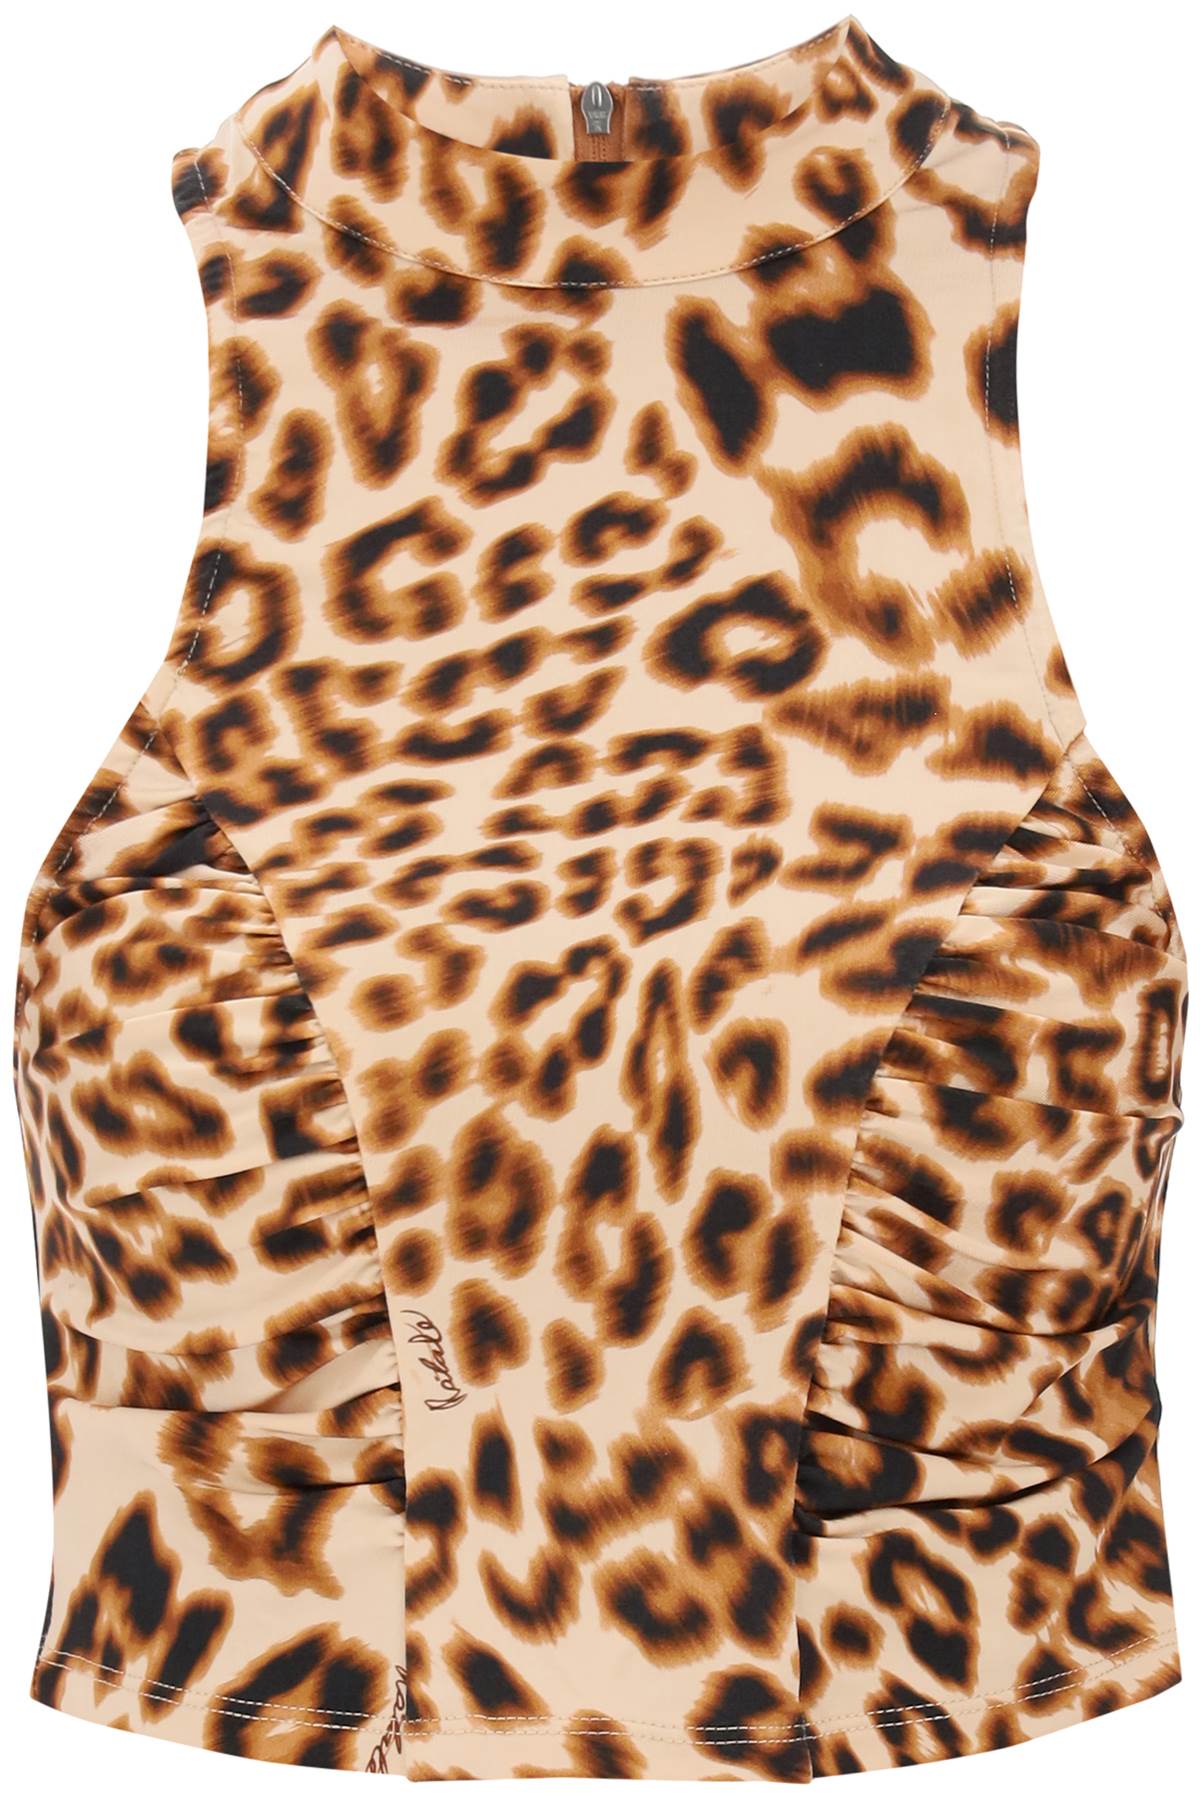 Rotate leopard print jersey crop top-women > clothing > tops-Rotate-Urbanheer